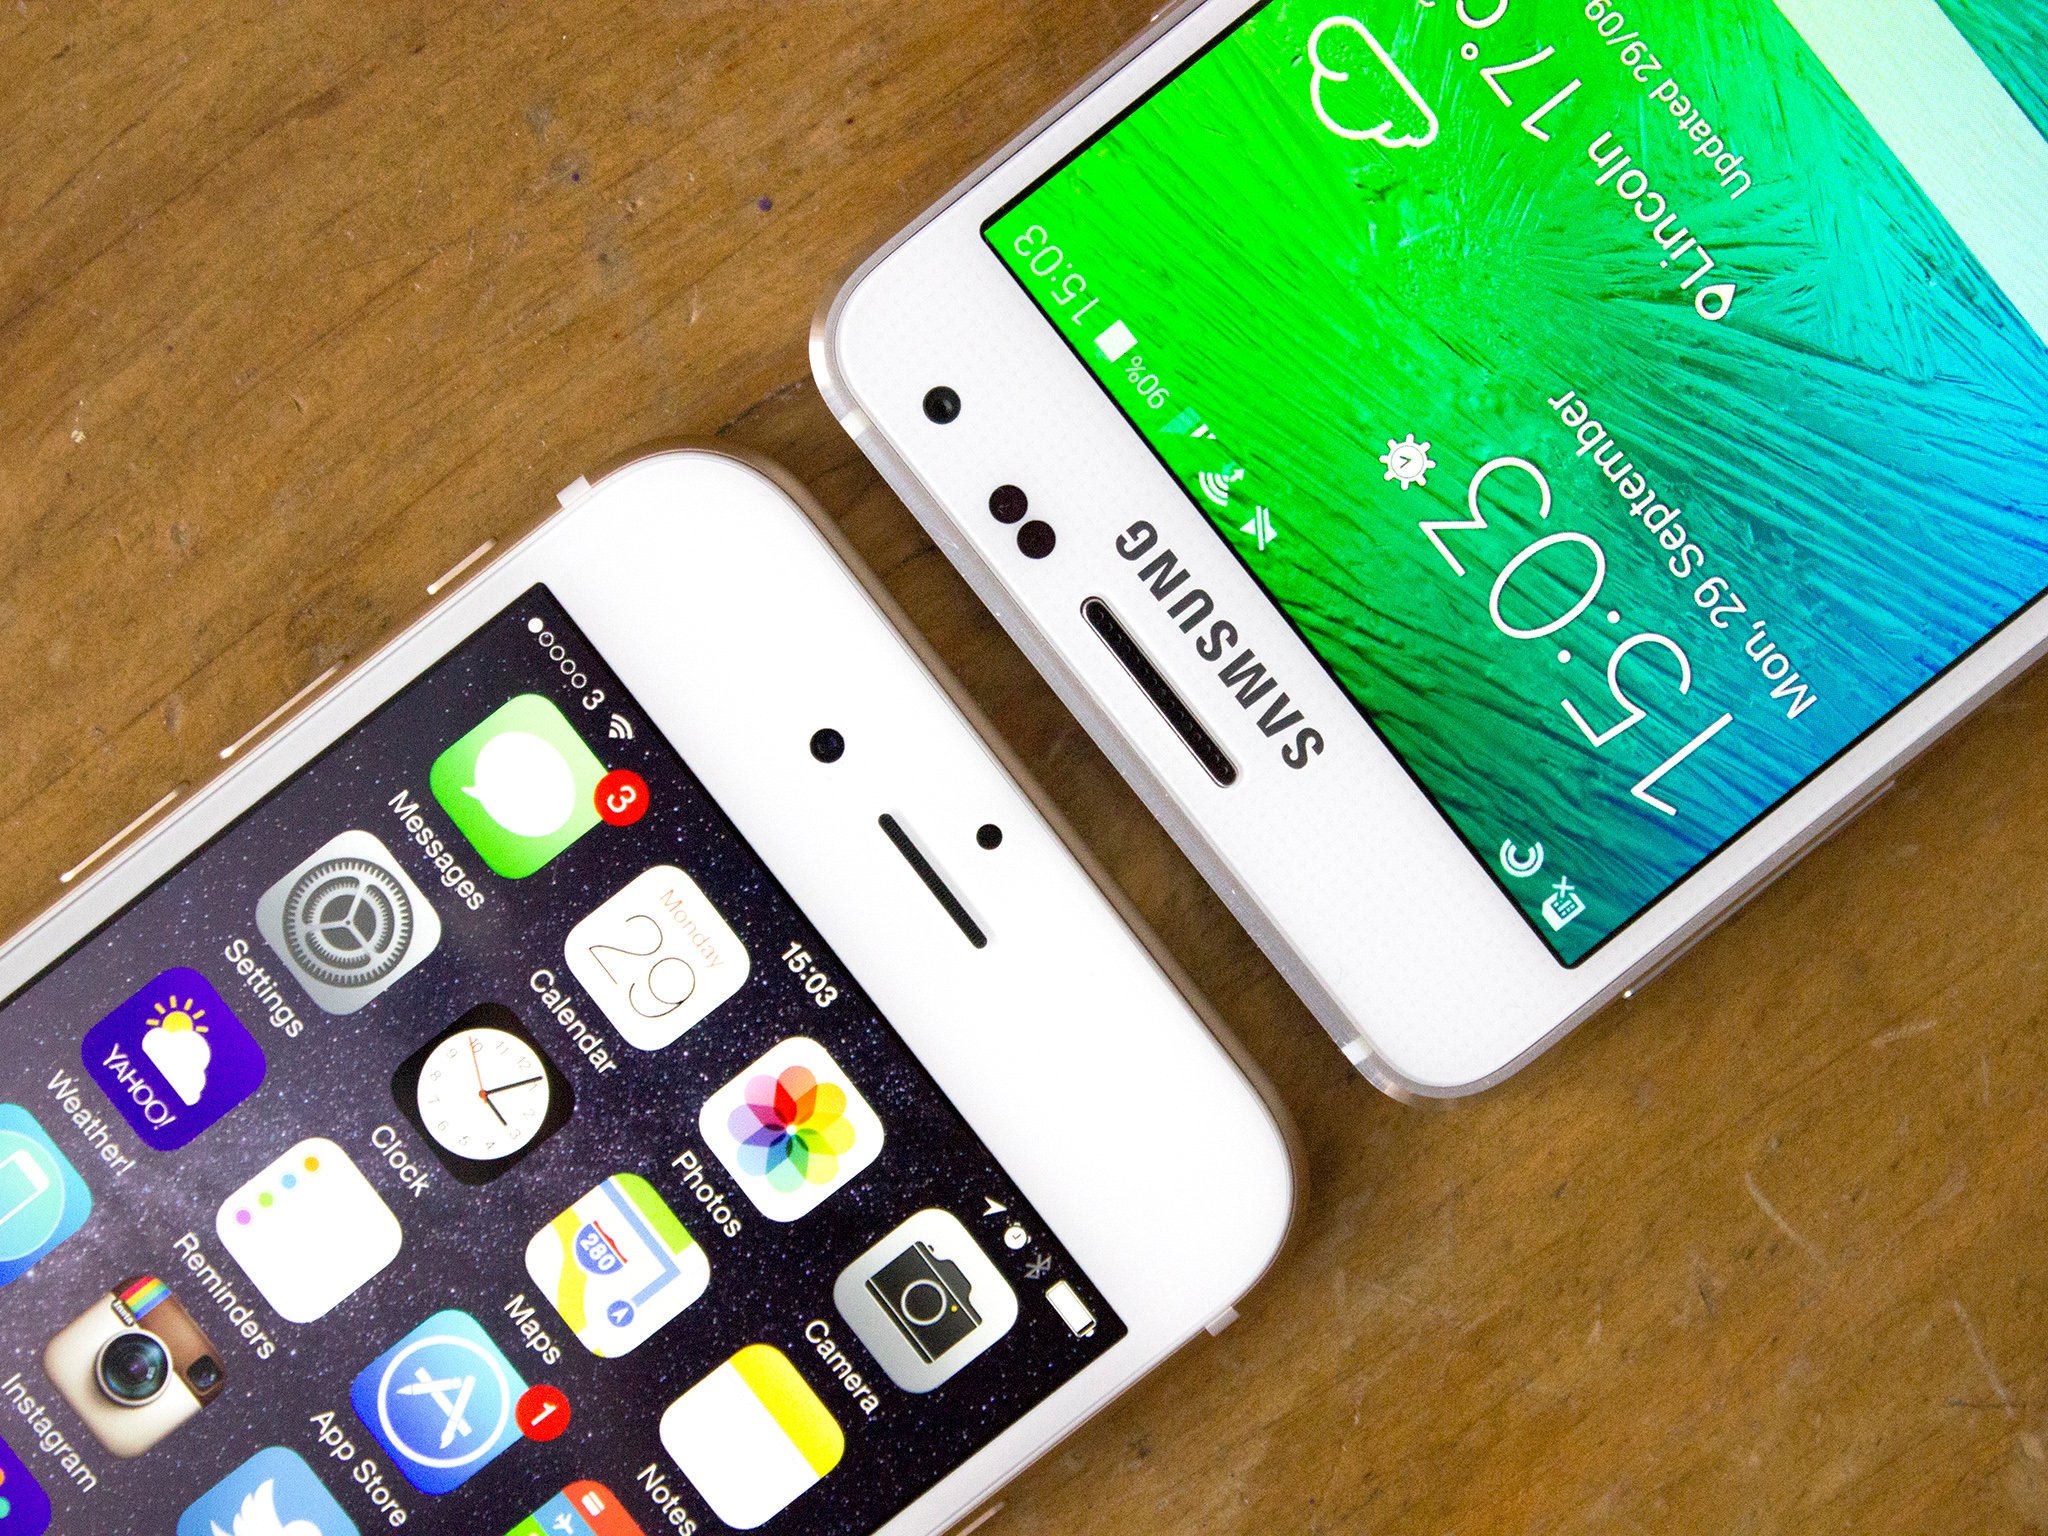 Samsung Galaxy Alpha vs iPhone 6